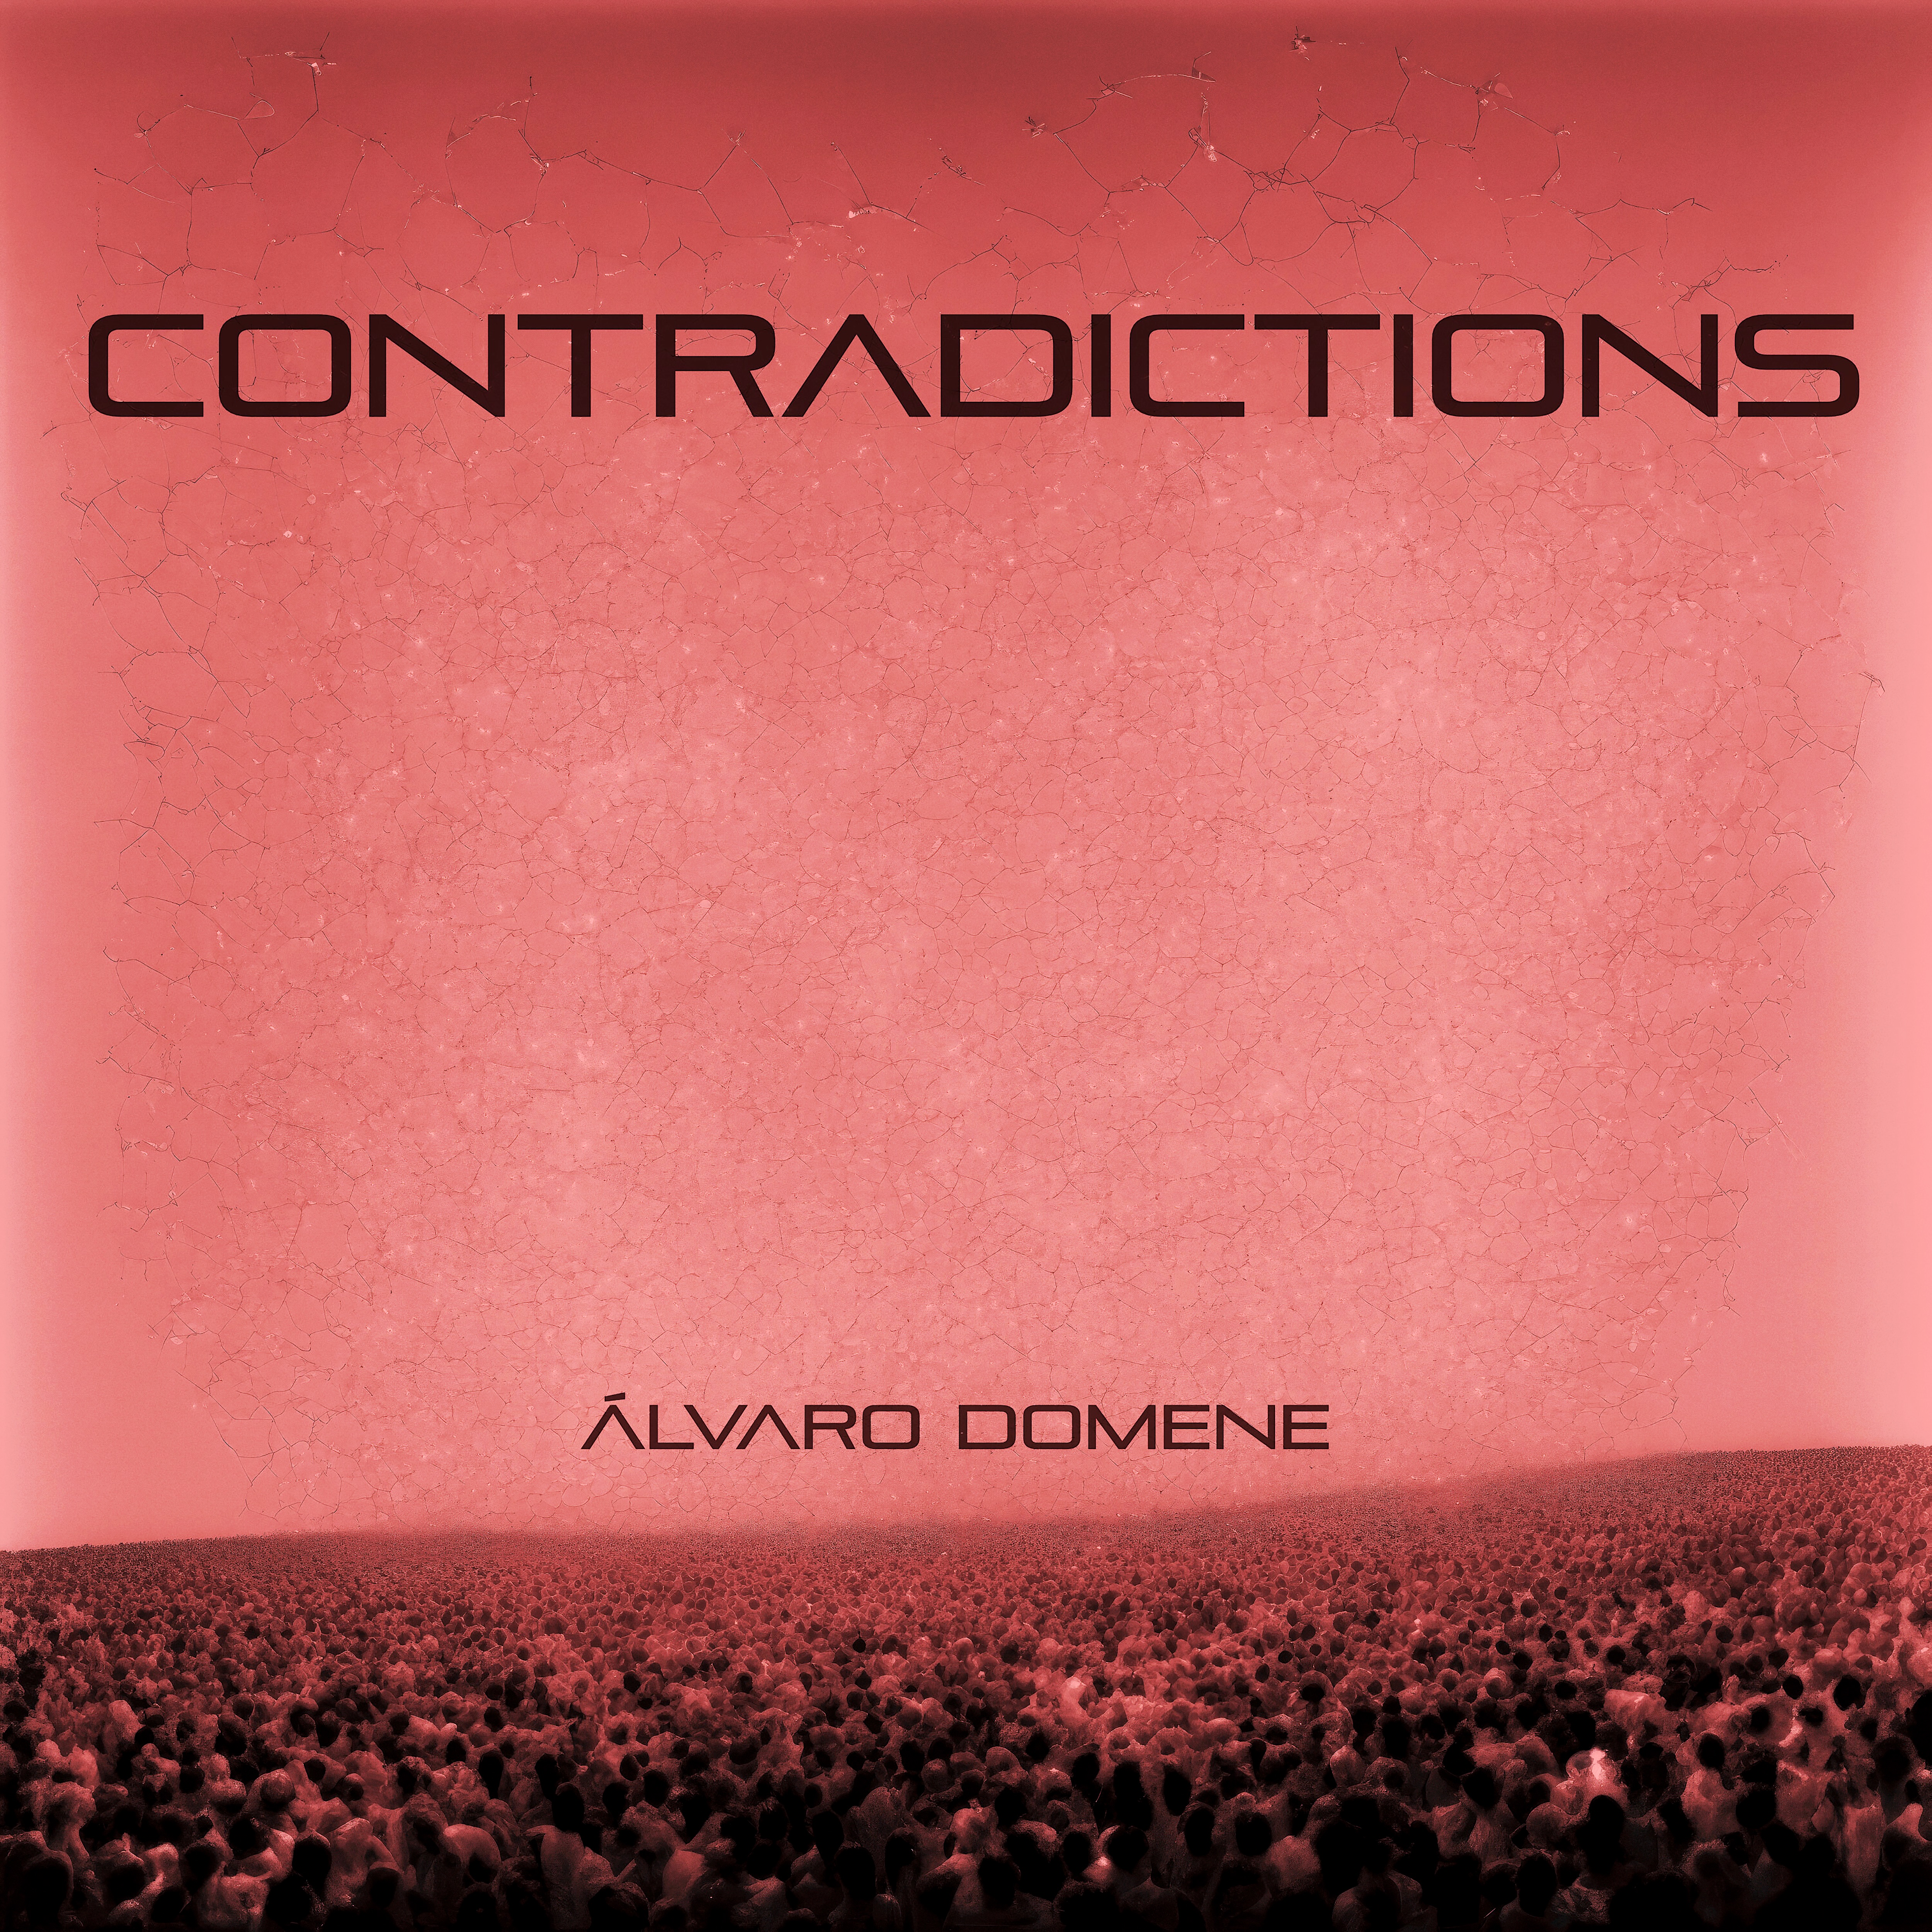 CONTRADICTIONS by Álvaro Domene